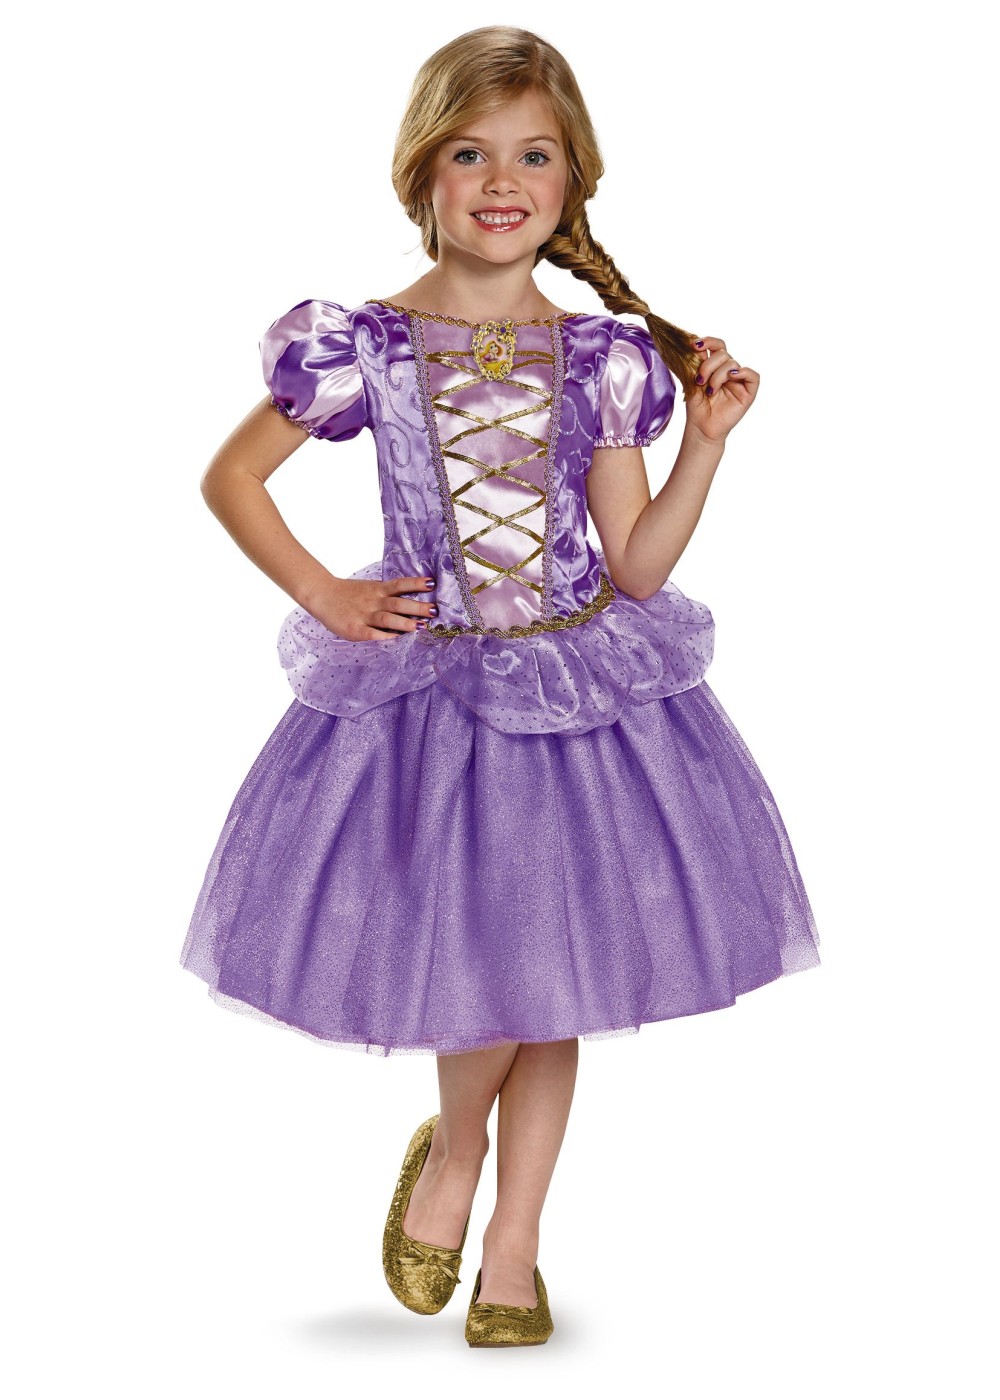 Rapunzel Disney Classic Girls Costume